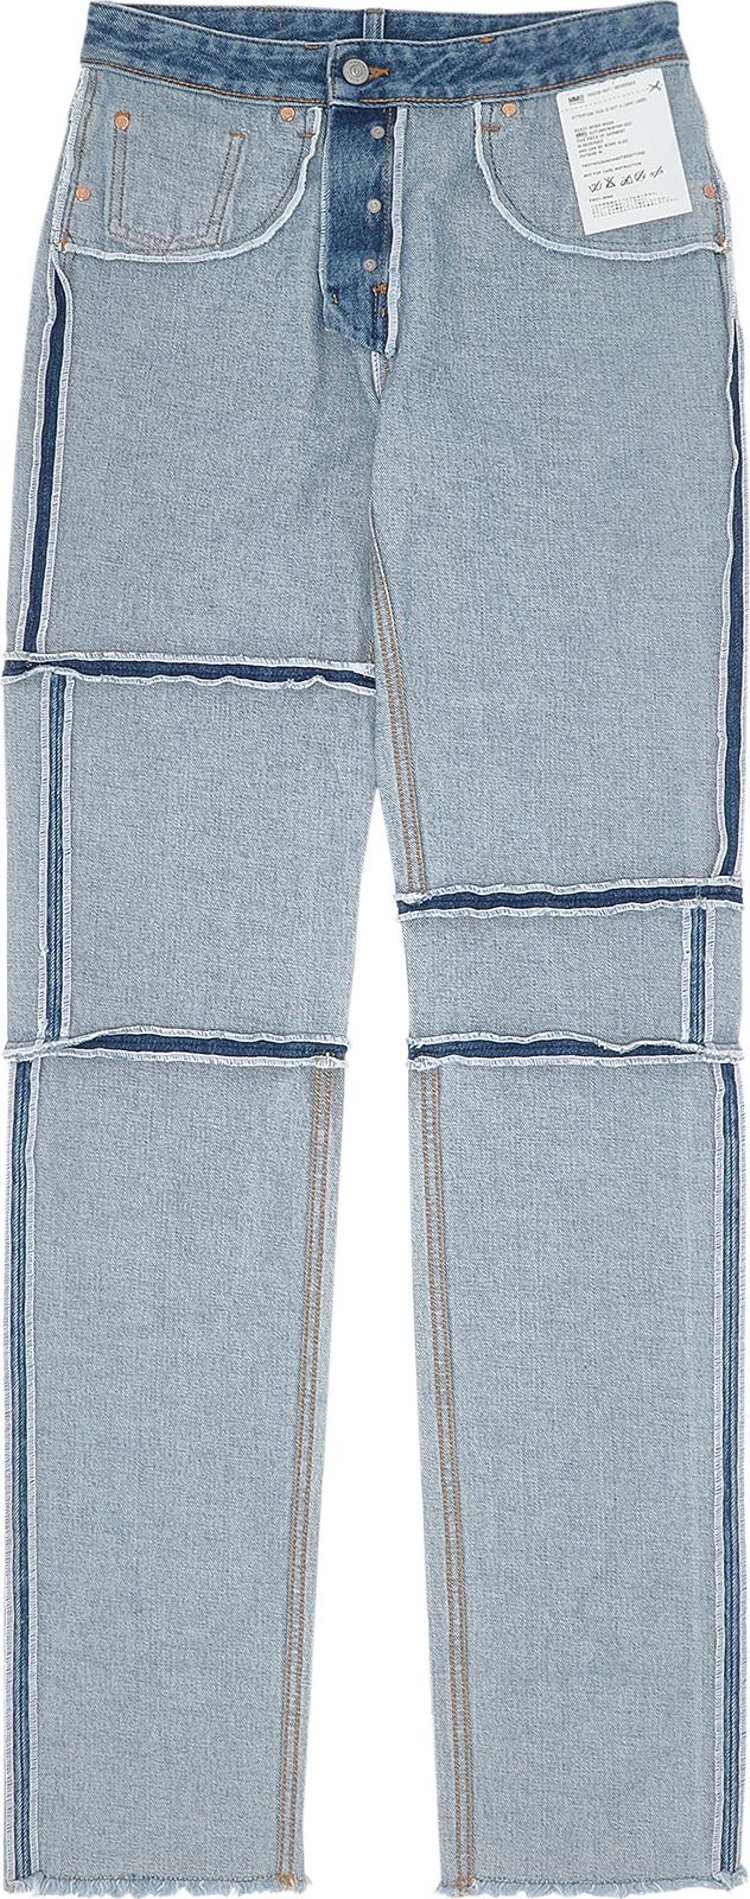 MM6 Maison Margiela Inside Out Panelled Jeans 'Seasonal Light'